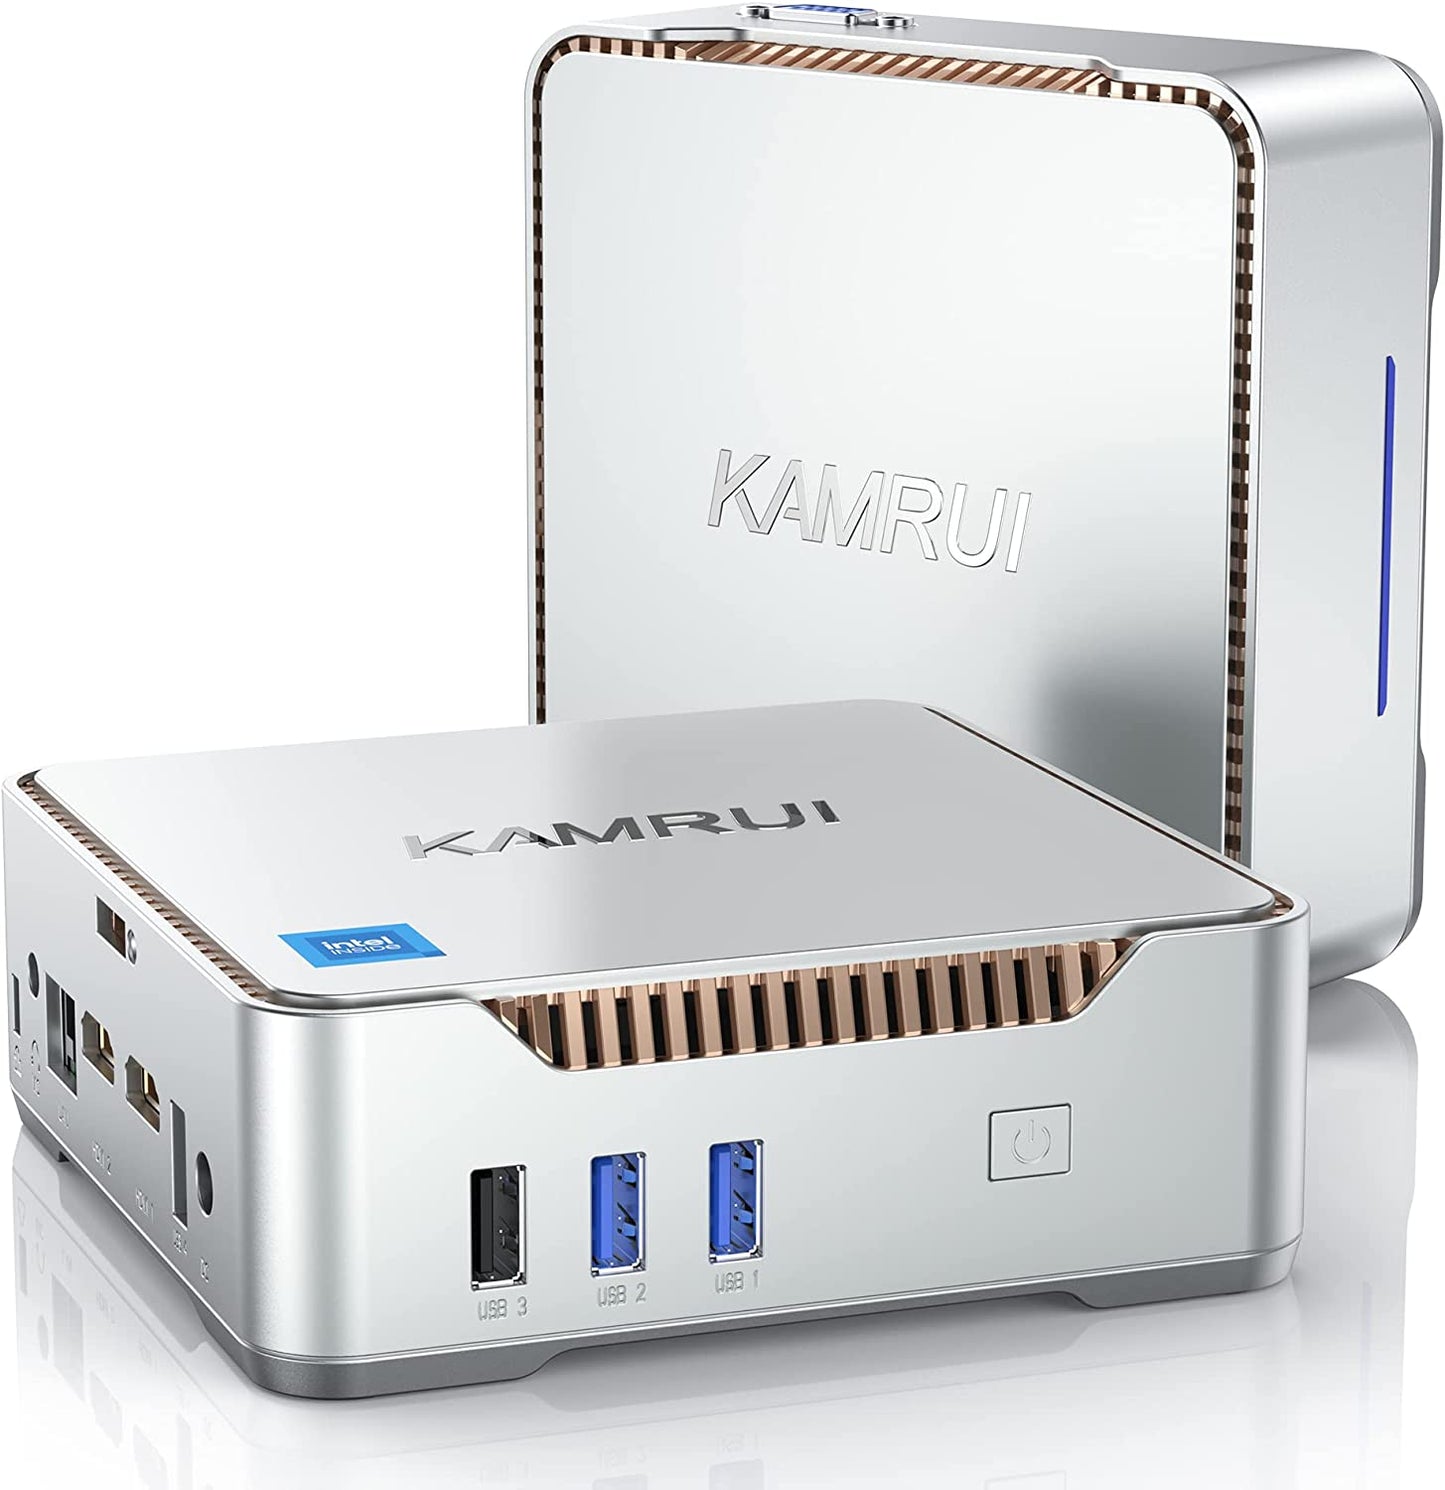 KAMRUI Mini PC,12th Intel Alder Lake- N95 up to 3.4 GHz,16GB RAM+512GB M.2 SSD, Windows 11 Pro Mini Computer,Support 2.5" SATA SSD,WiFi 2.4G/5G,Bluetooth4.2,Triple Display,4K Reliable Office Small PC